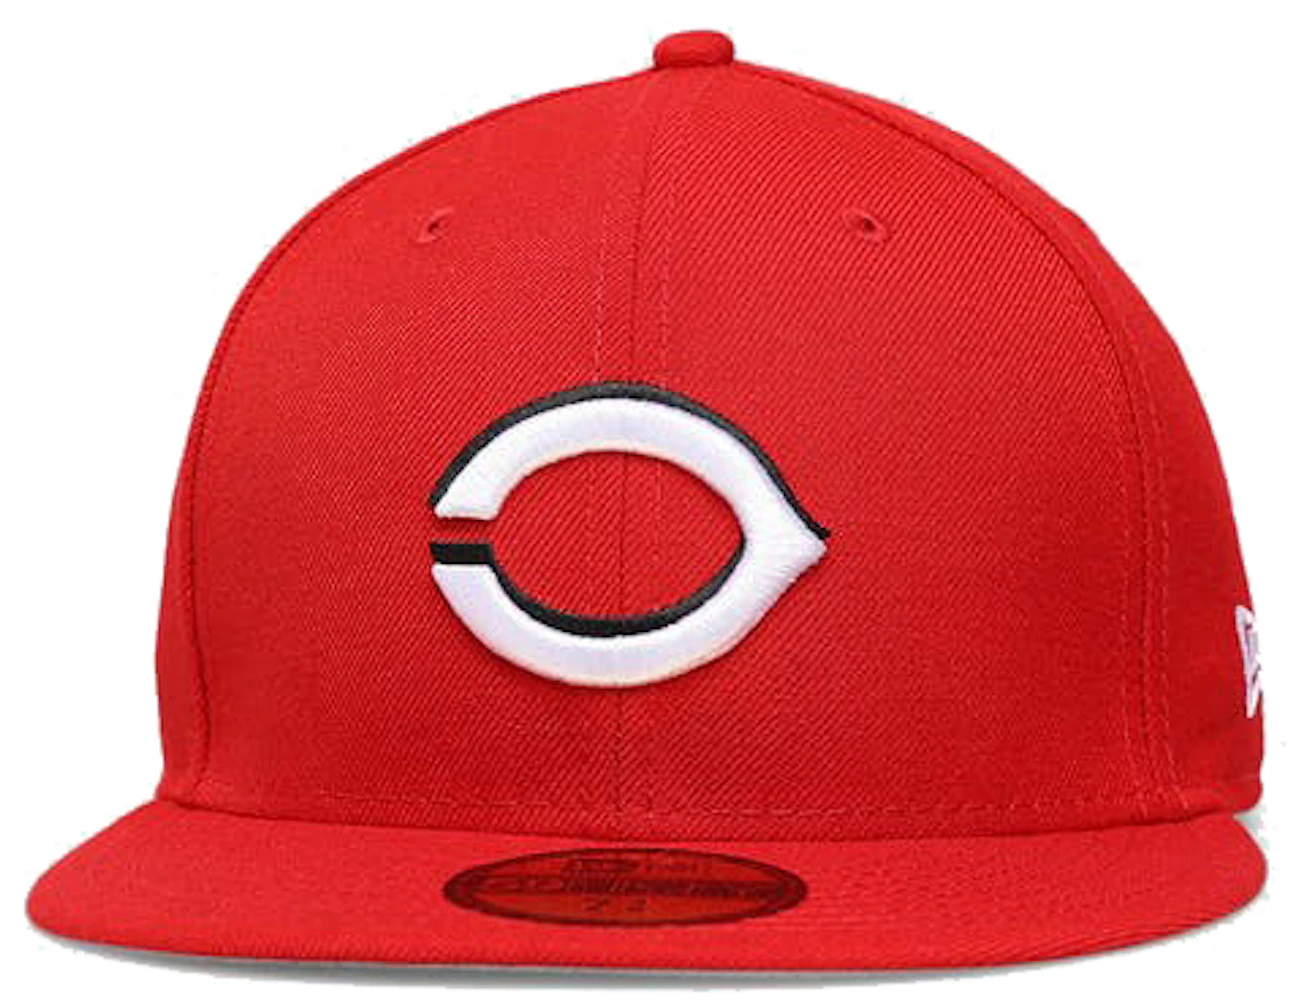 Exclusive Fitted New Era 7 3/4 Cincinnati Reds Cap Hat Running Man